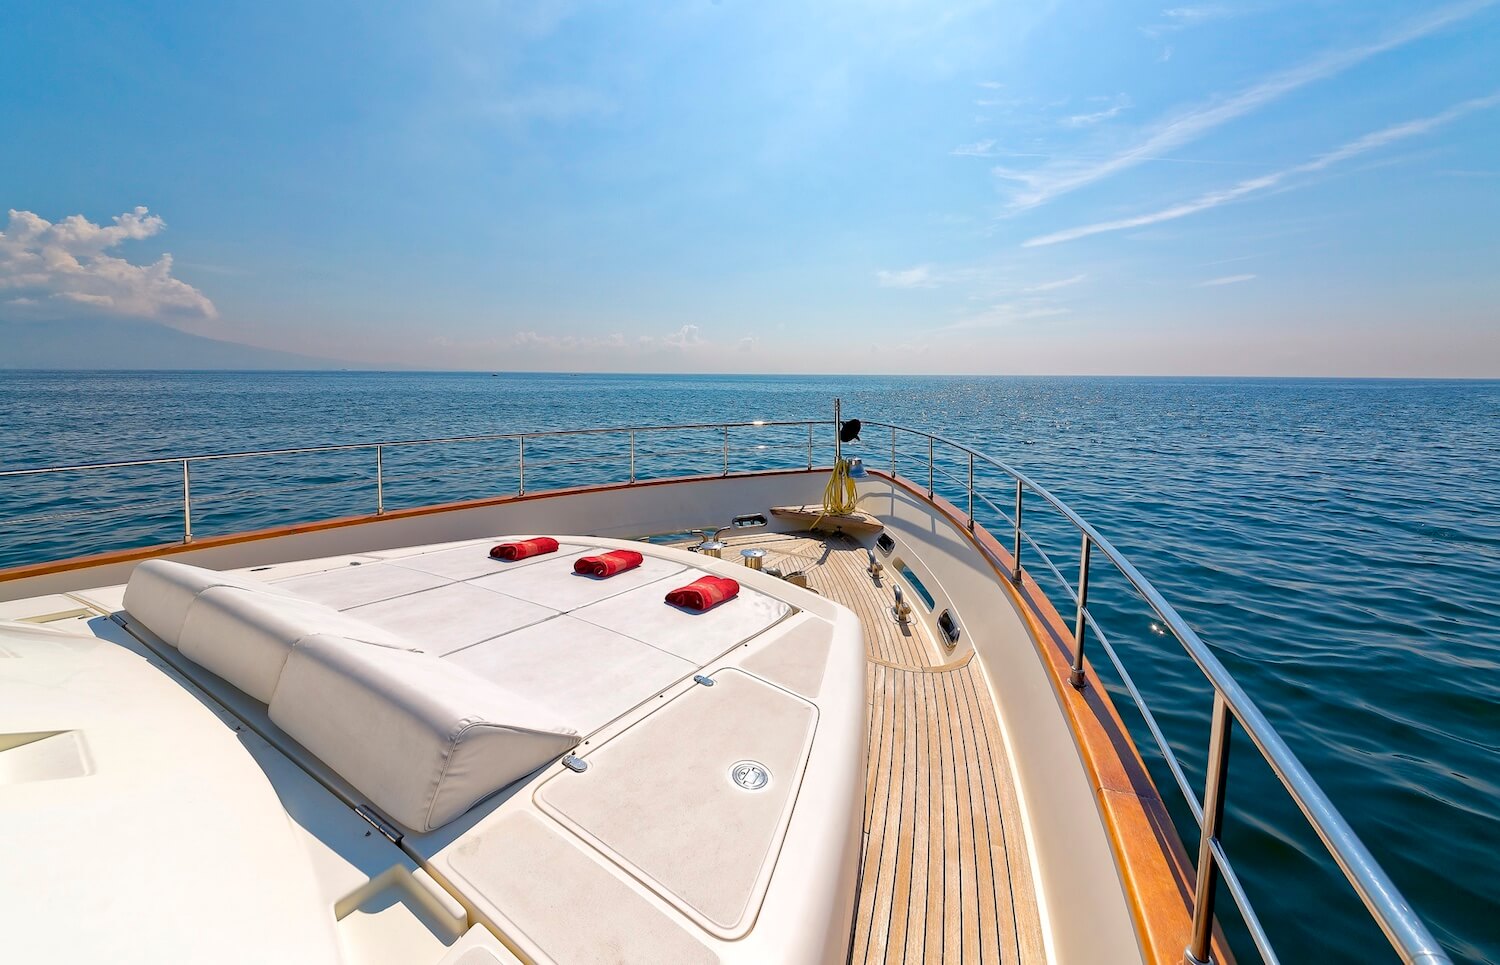 Bow of Ferretti yacht ANNE MARIE on the Amalfi Coast, Italy